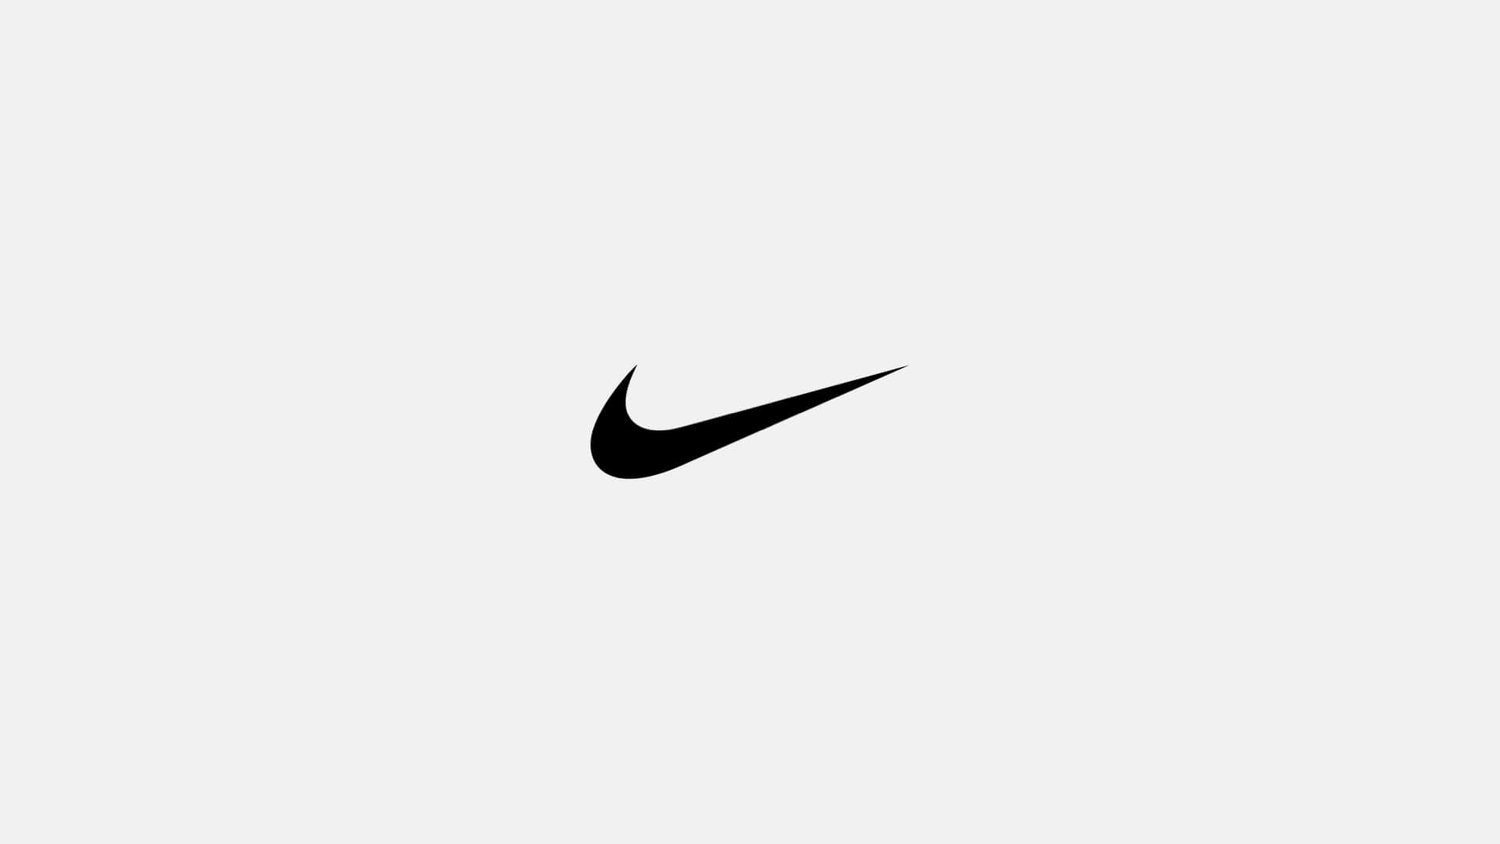 So you want an iconic logo like Apple or Nike? | wesjones.co